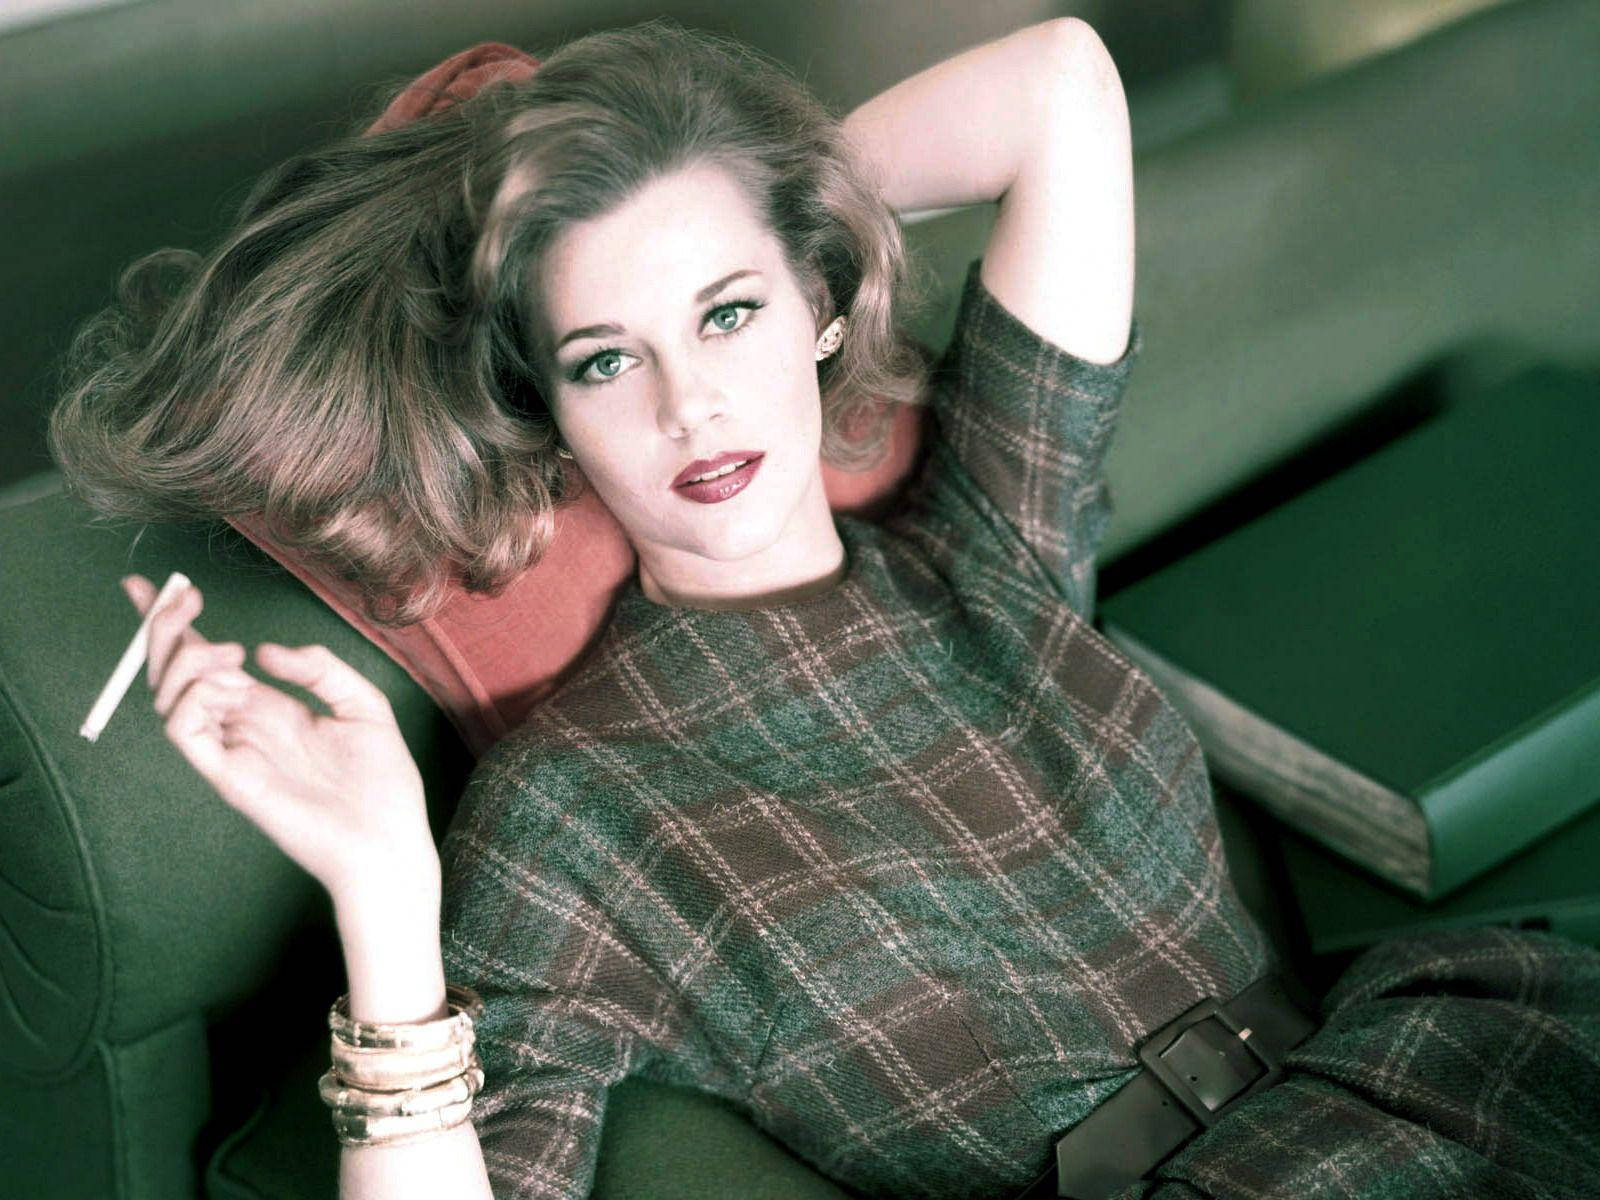 Vintage Glamour - American Actress Jane Fonda Posing With Cigarette Wallpaper